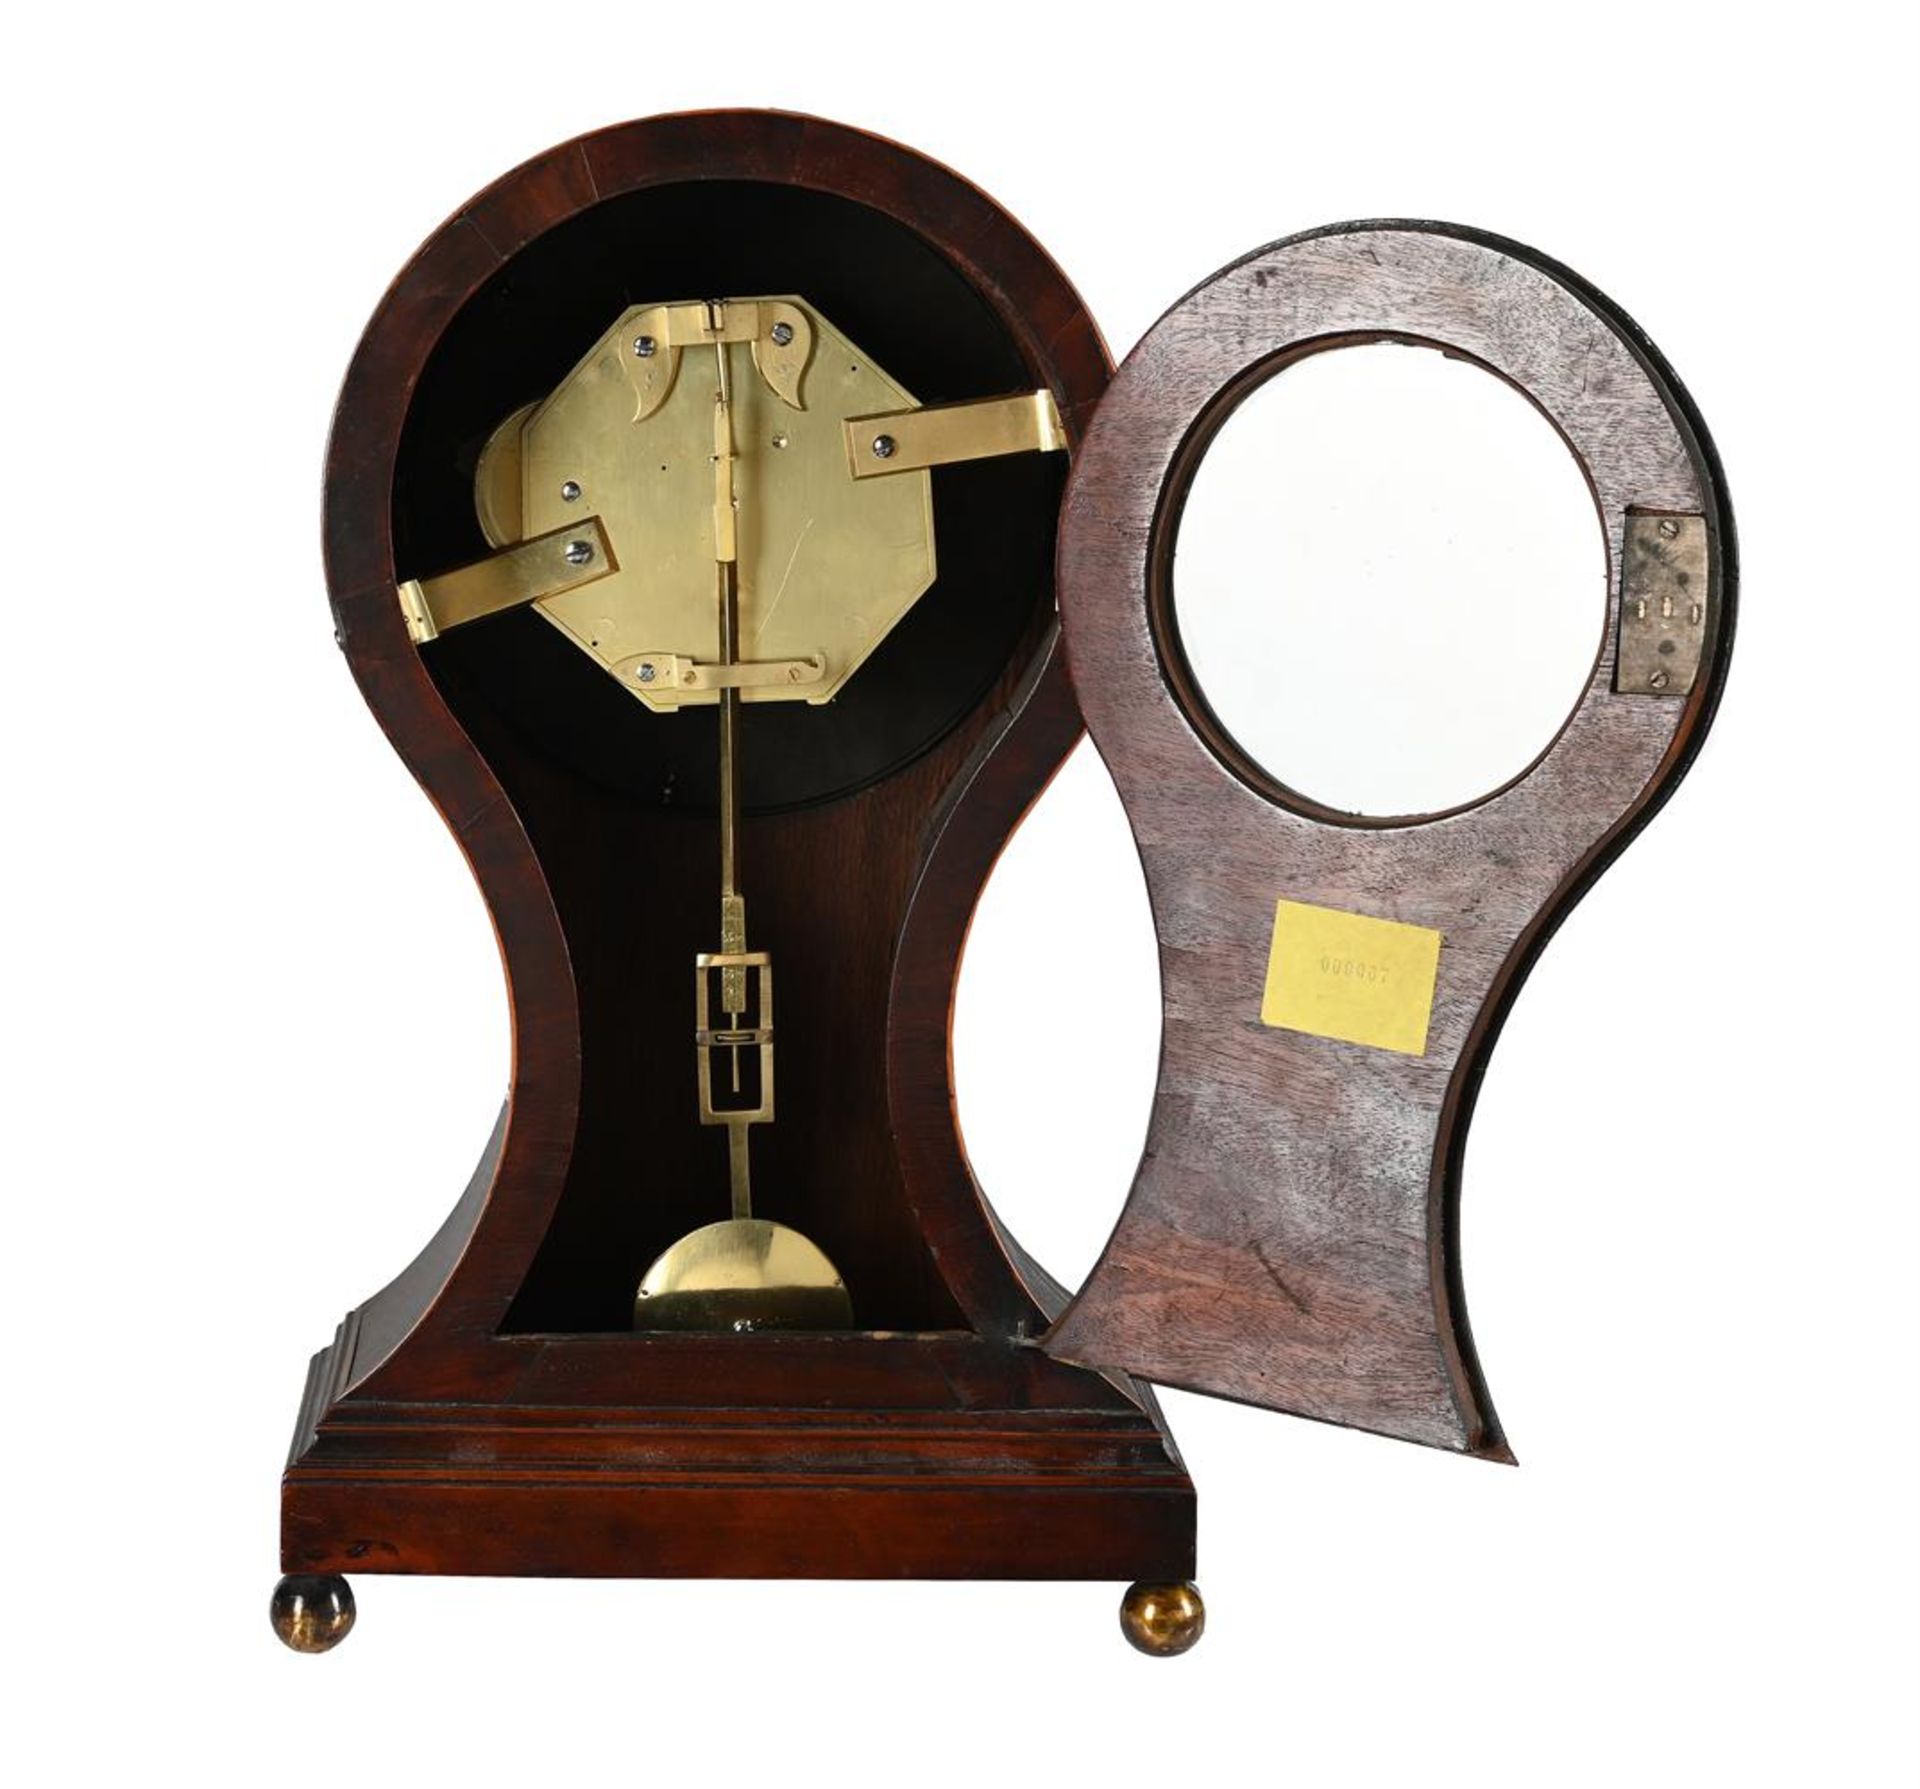 A GEORGE III ‘FIDDLE-BACK’ MAHOGANY VENEERED BALLOON-SHAPED TABLE/BRACKET TIMEPIECE - Image 2 of 2